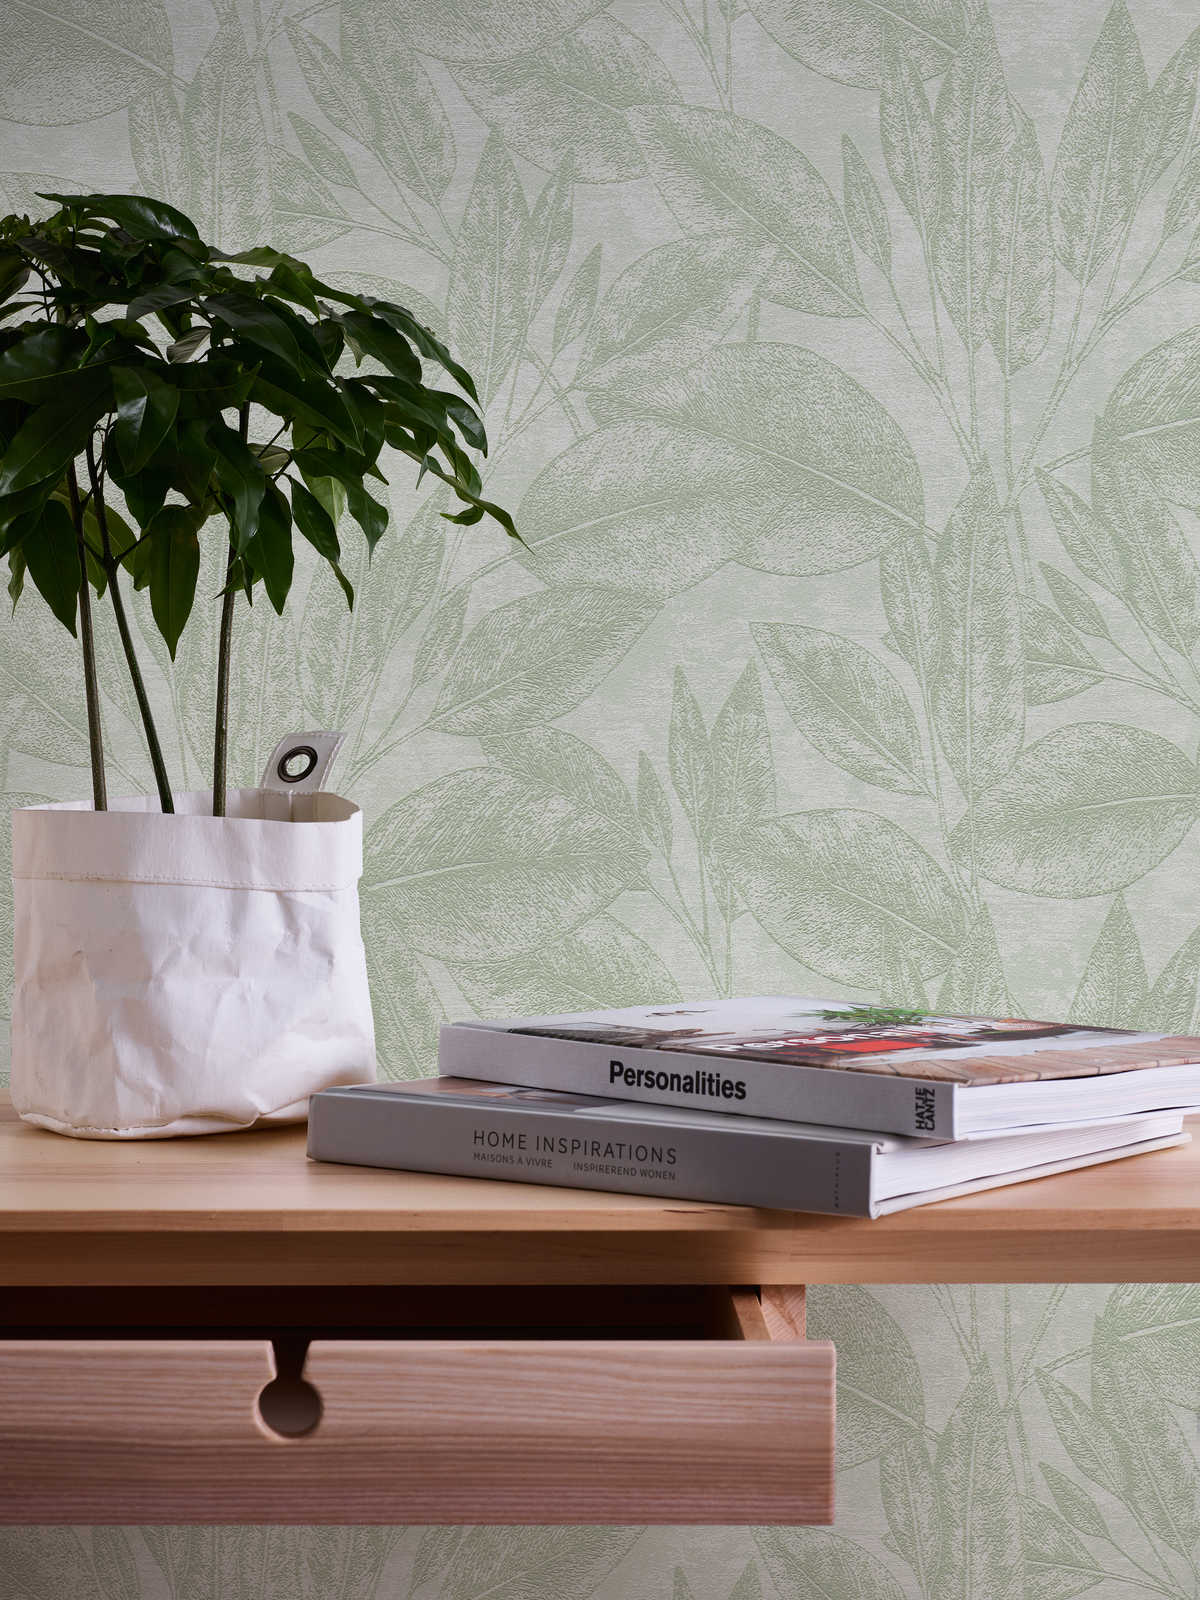             Papier peint intissé naturel avec feuilles & motifs structurés - vert
        